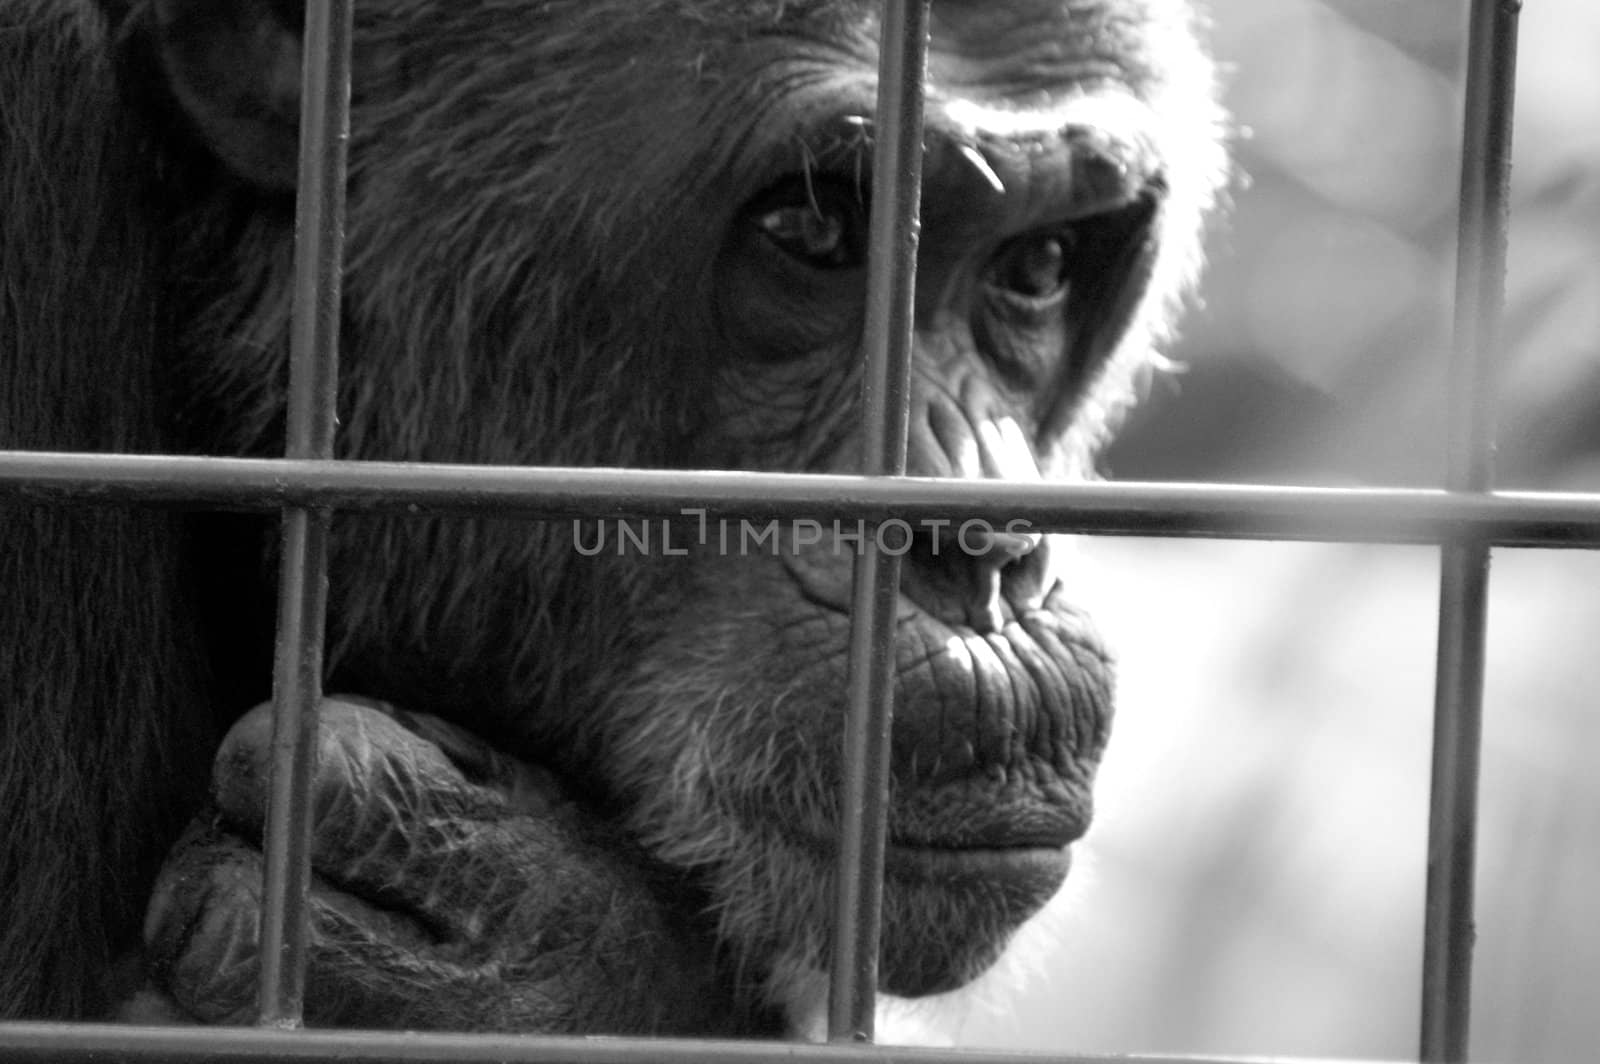 Monkey behind bars by photochecker